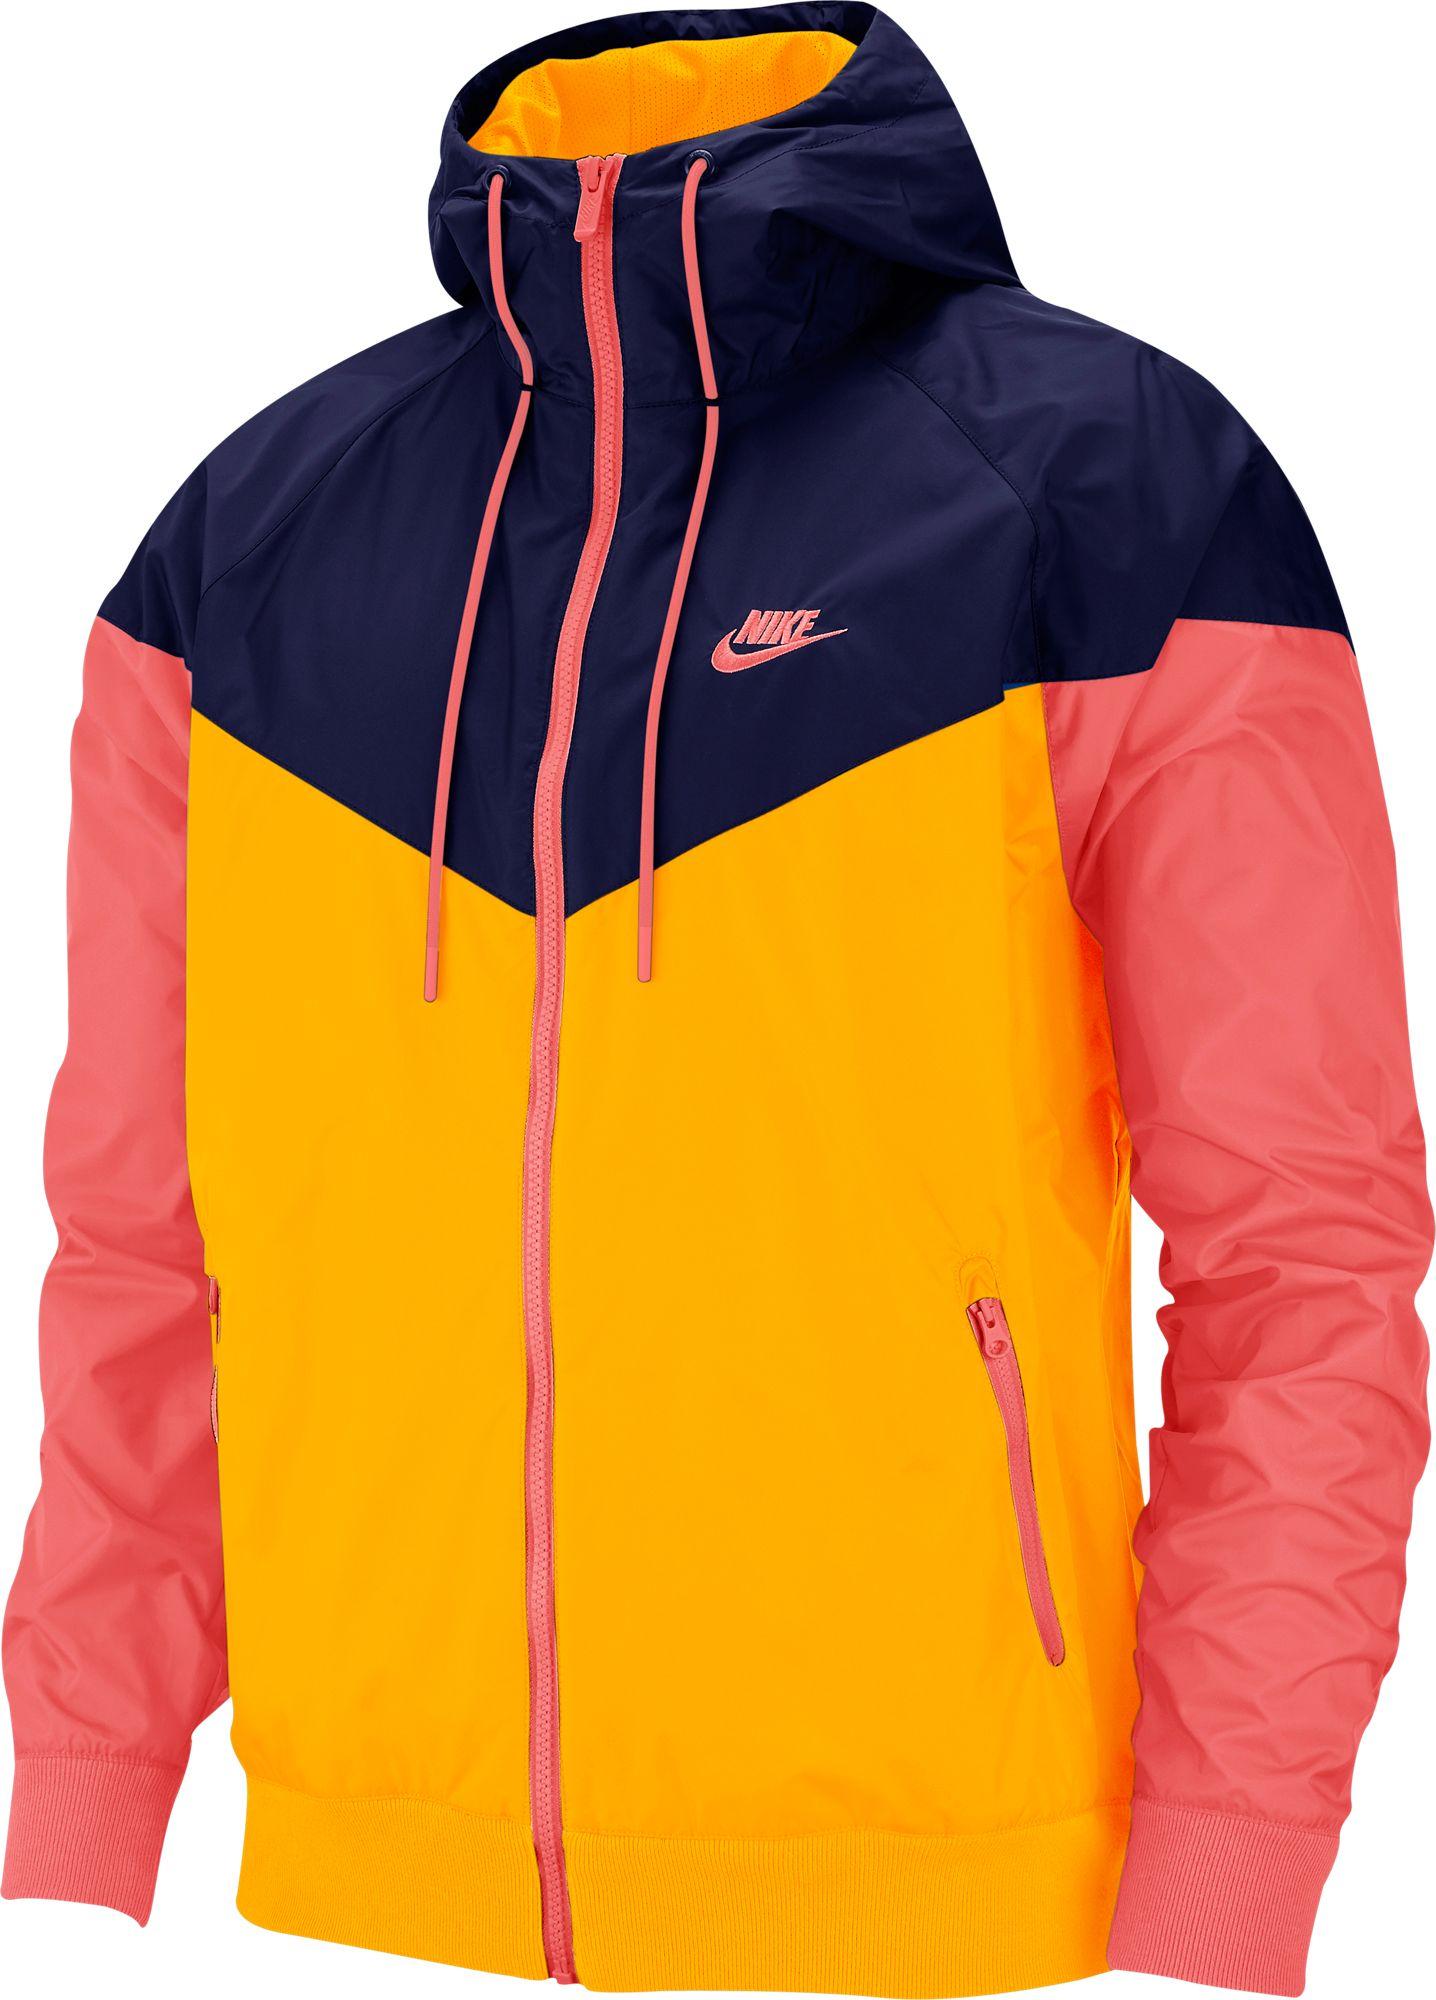 Download Nike Sportswear 2019 Hooded Windrunner Jacket (regular And ...